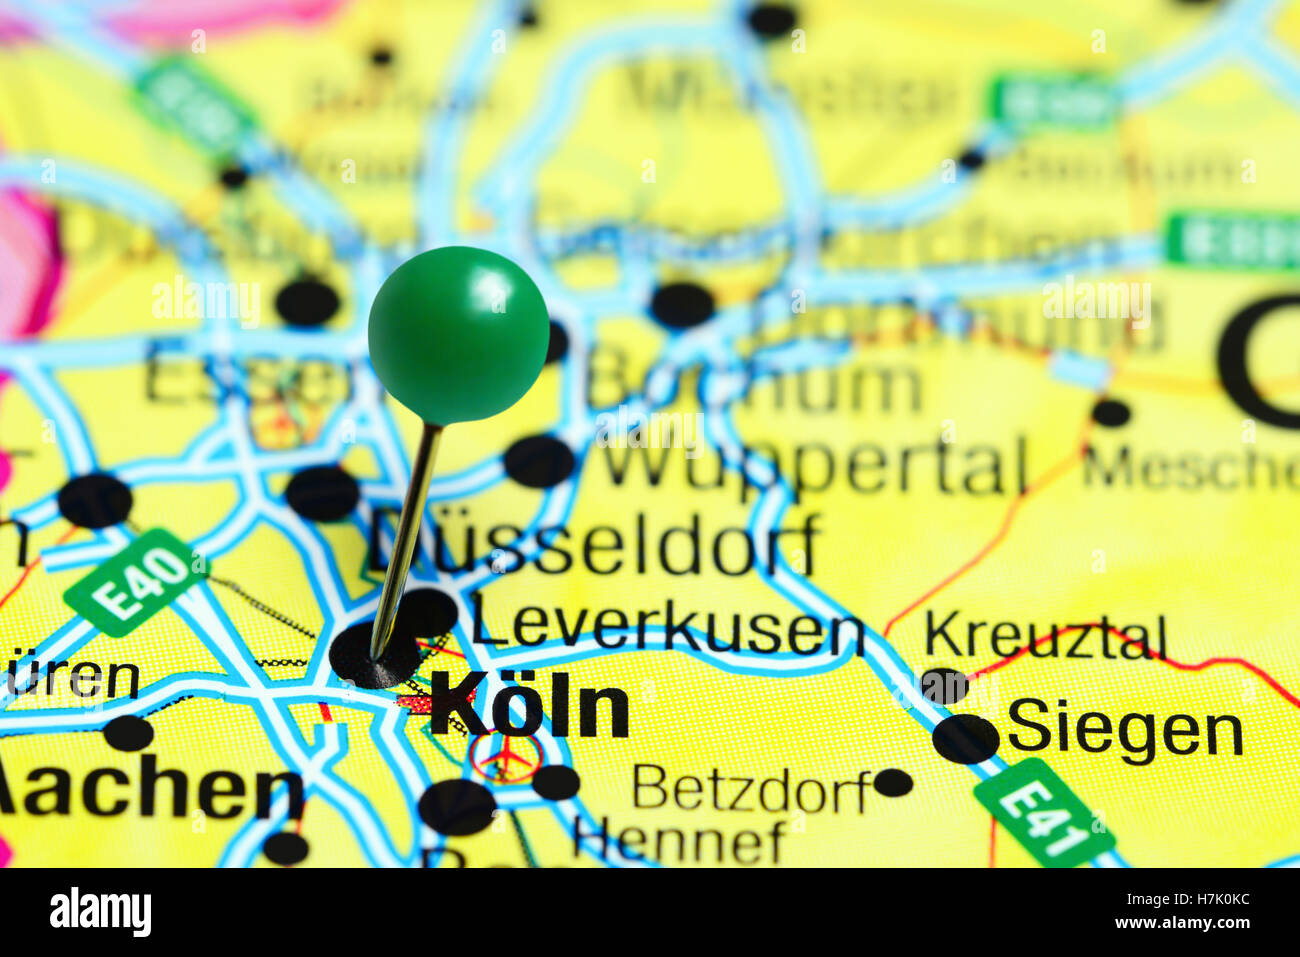 Koln pinned on a map of Germany Stock Photo